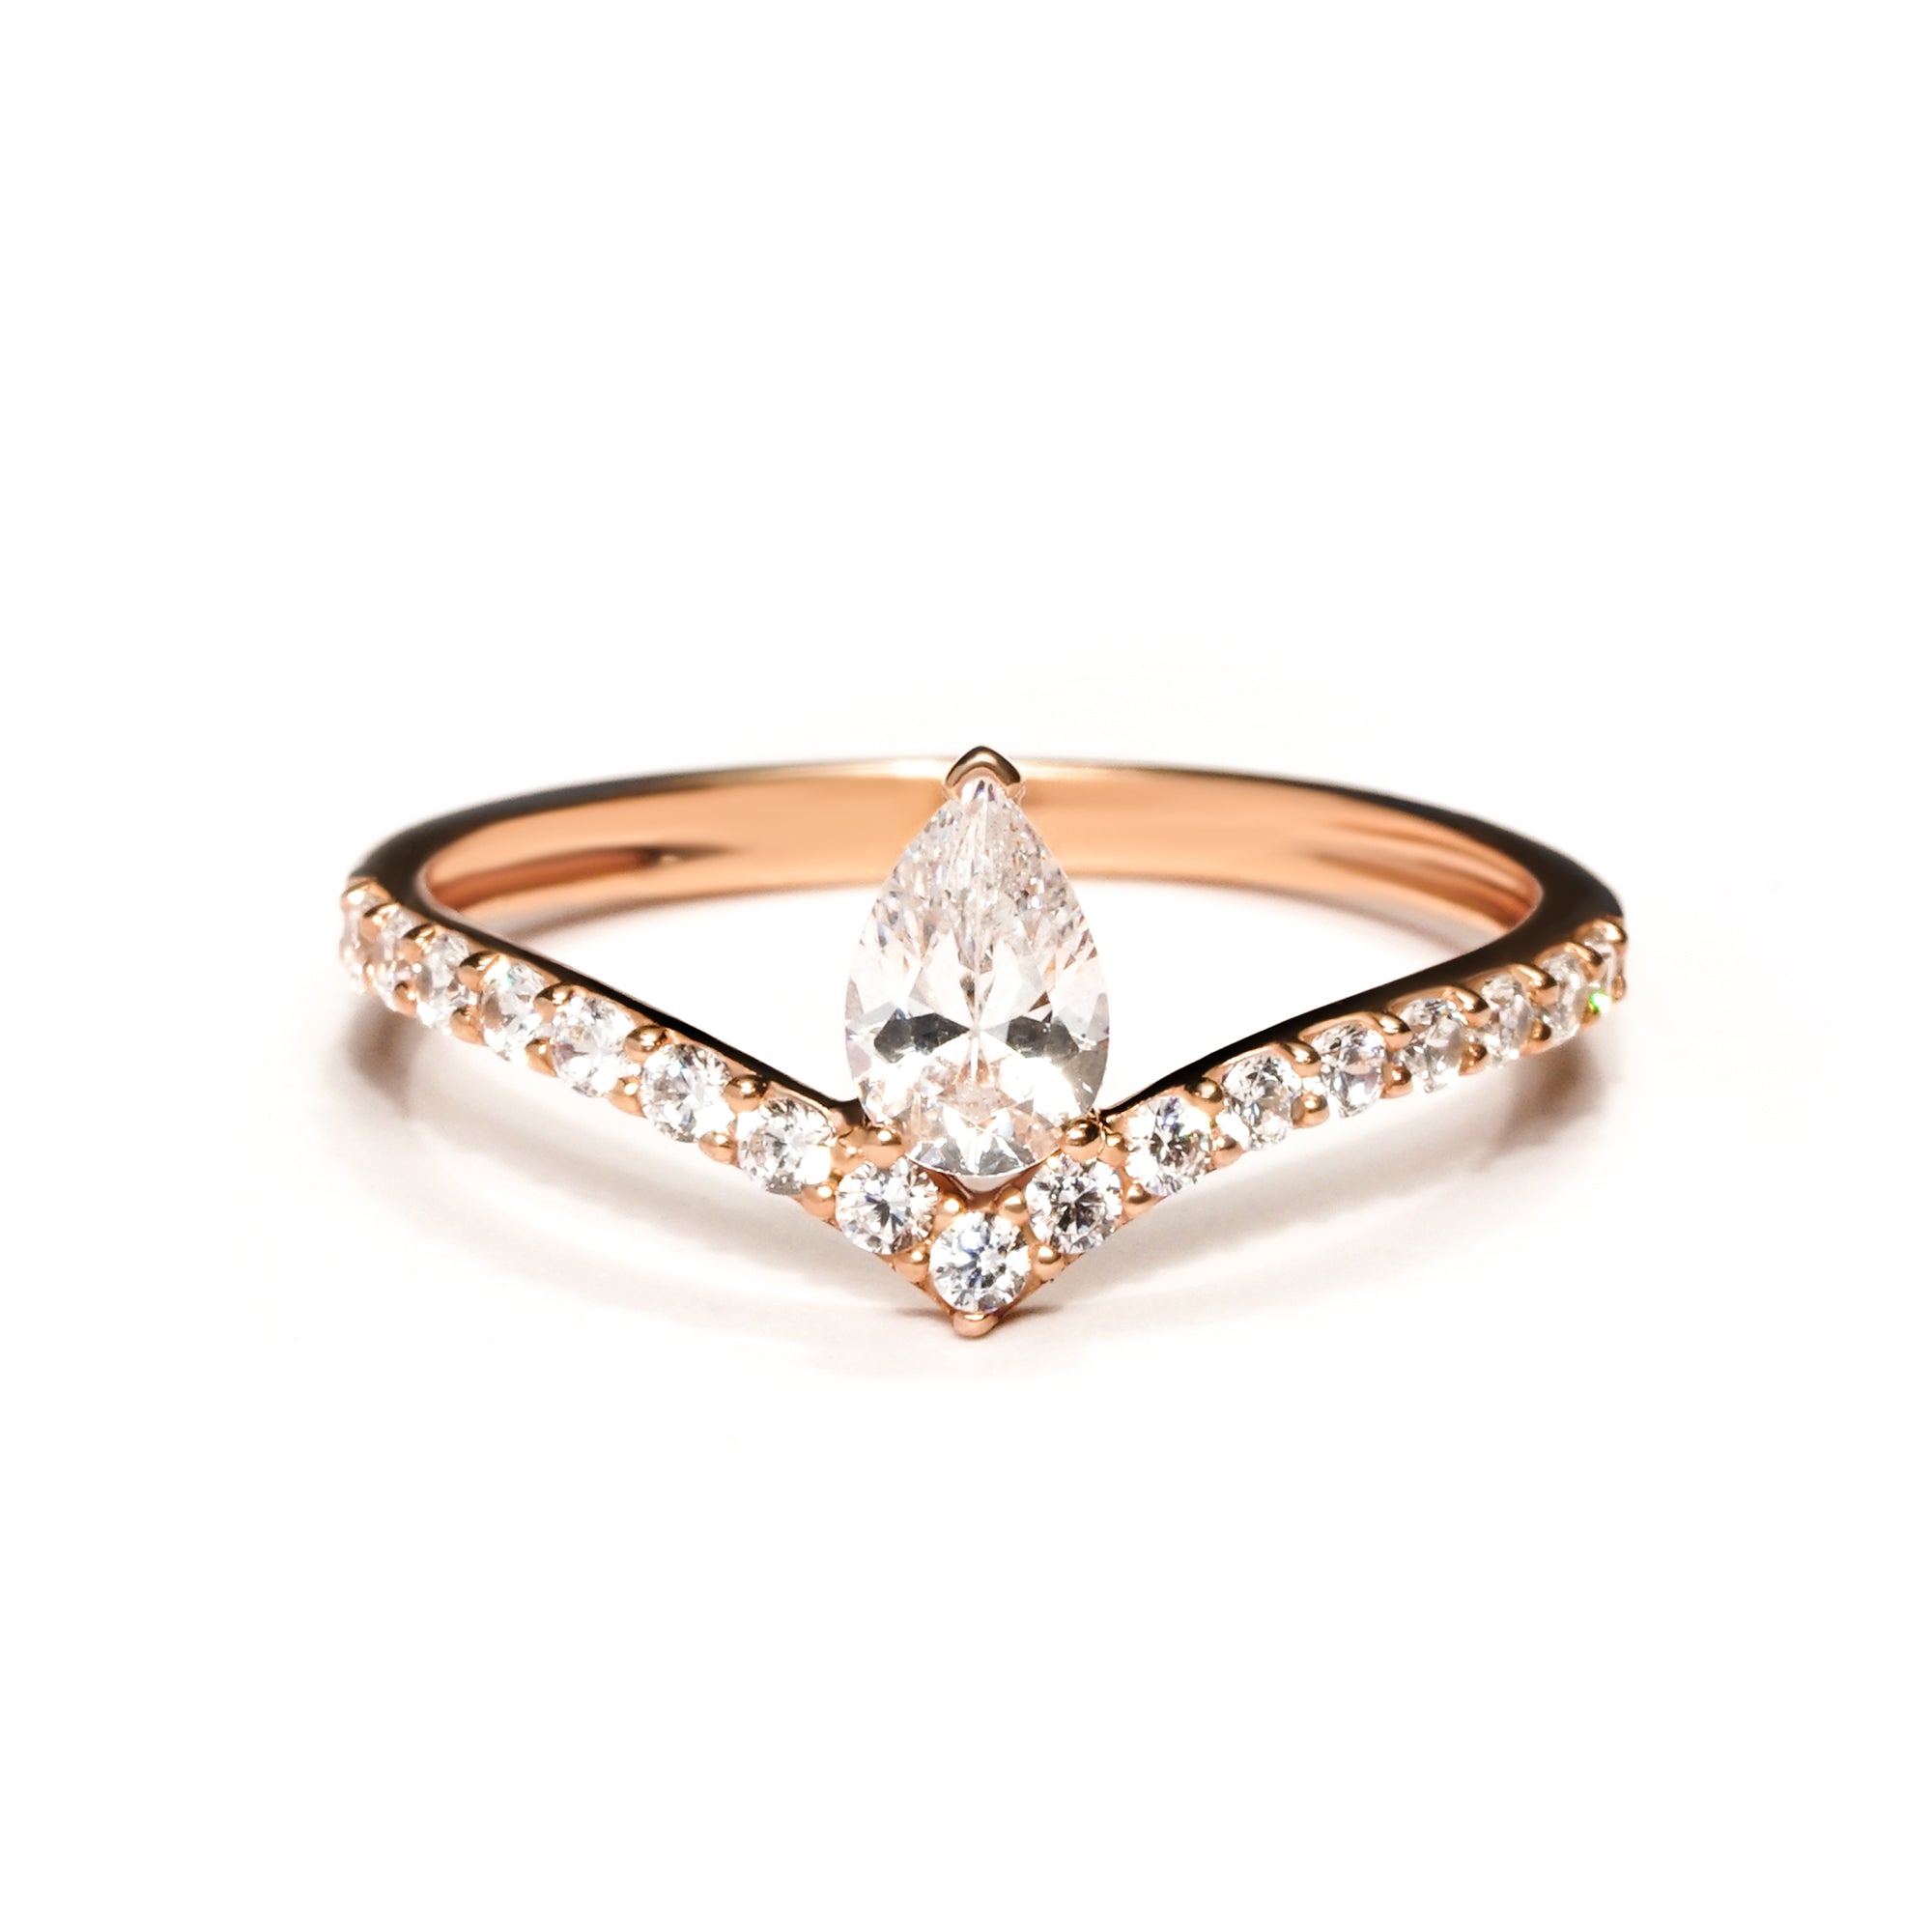 Yasmin Gold Ring - Serene Collection - Juene Jewelry